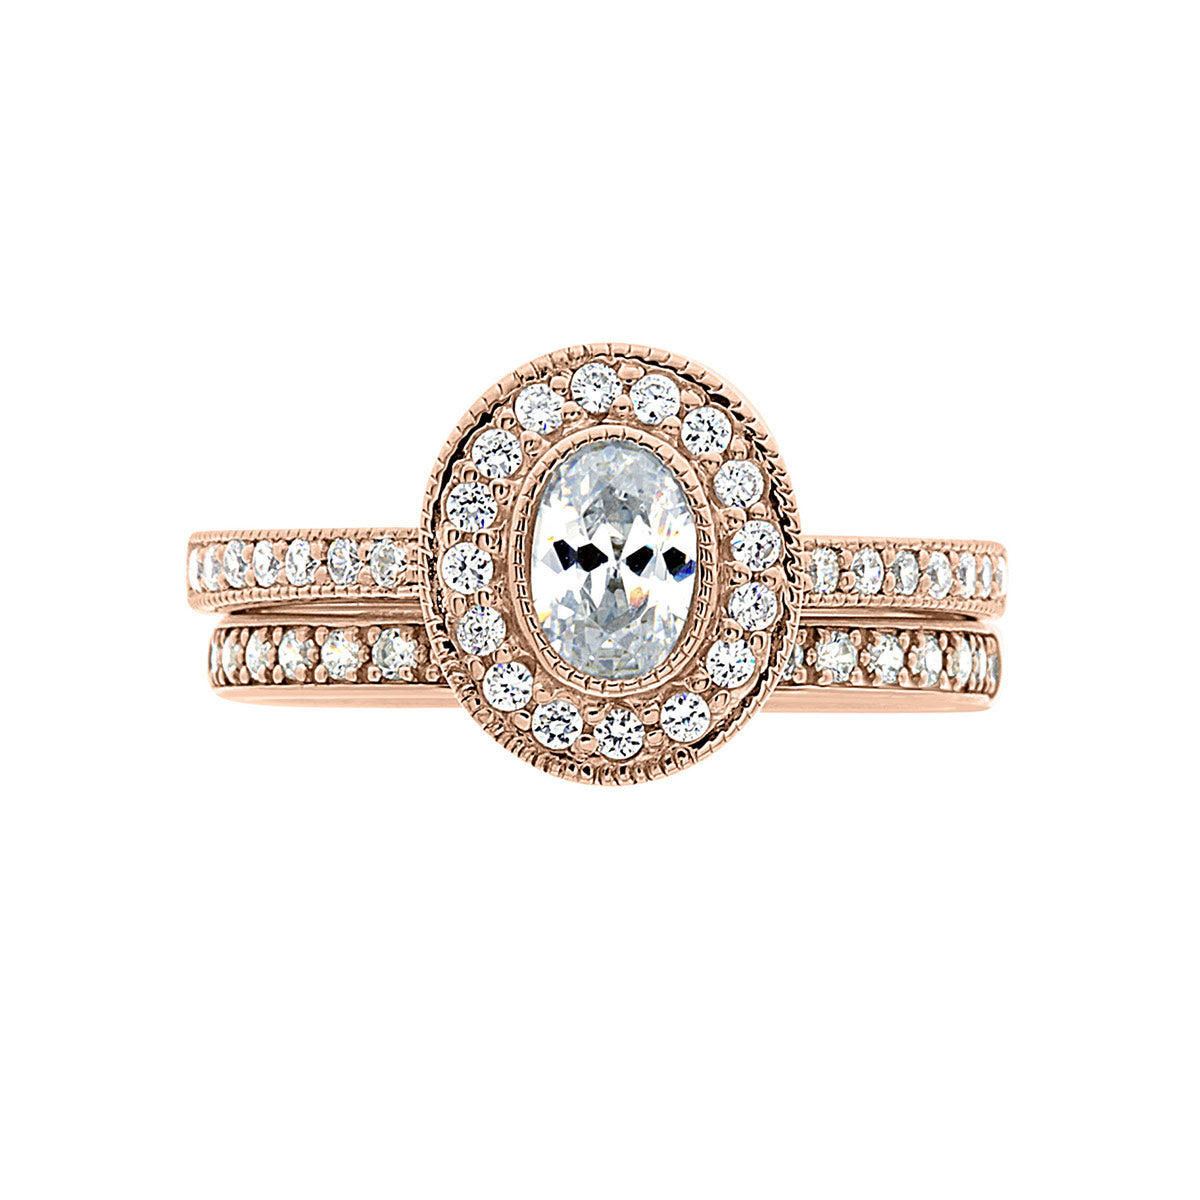 Milgrain Detail Engagement Ring in rose gold with a matching diamond set rose gold wedding ring